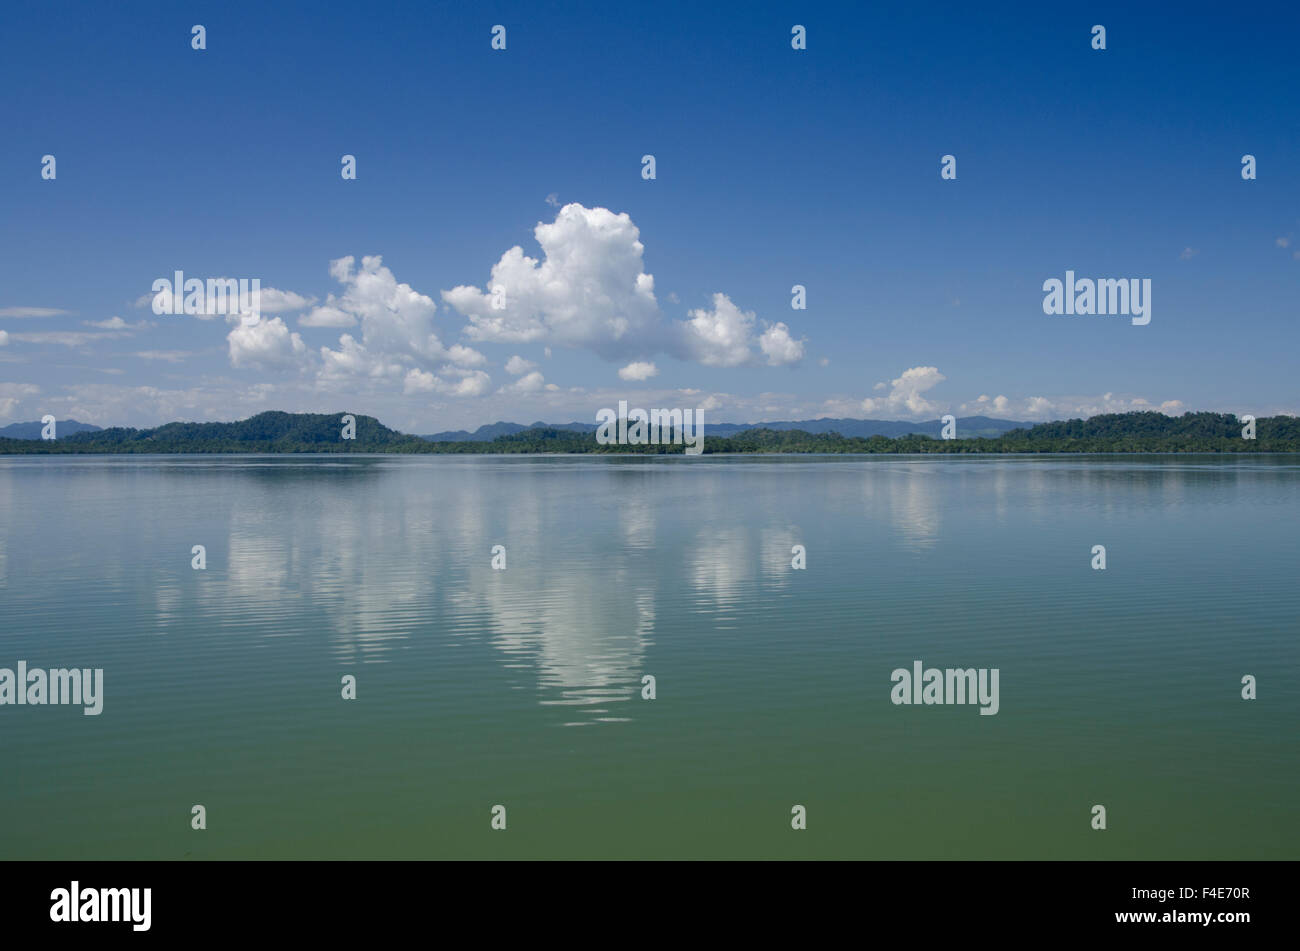 Guatemala, Department of Izabal, Rio Dulce River, El Golfete lake. Calm lake with cloud reflections. Stock Photo